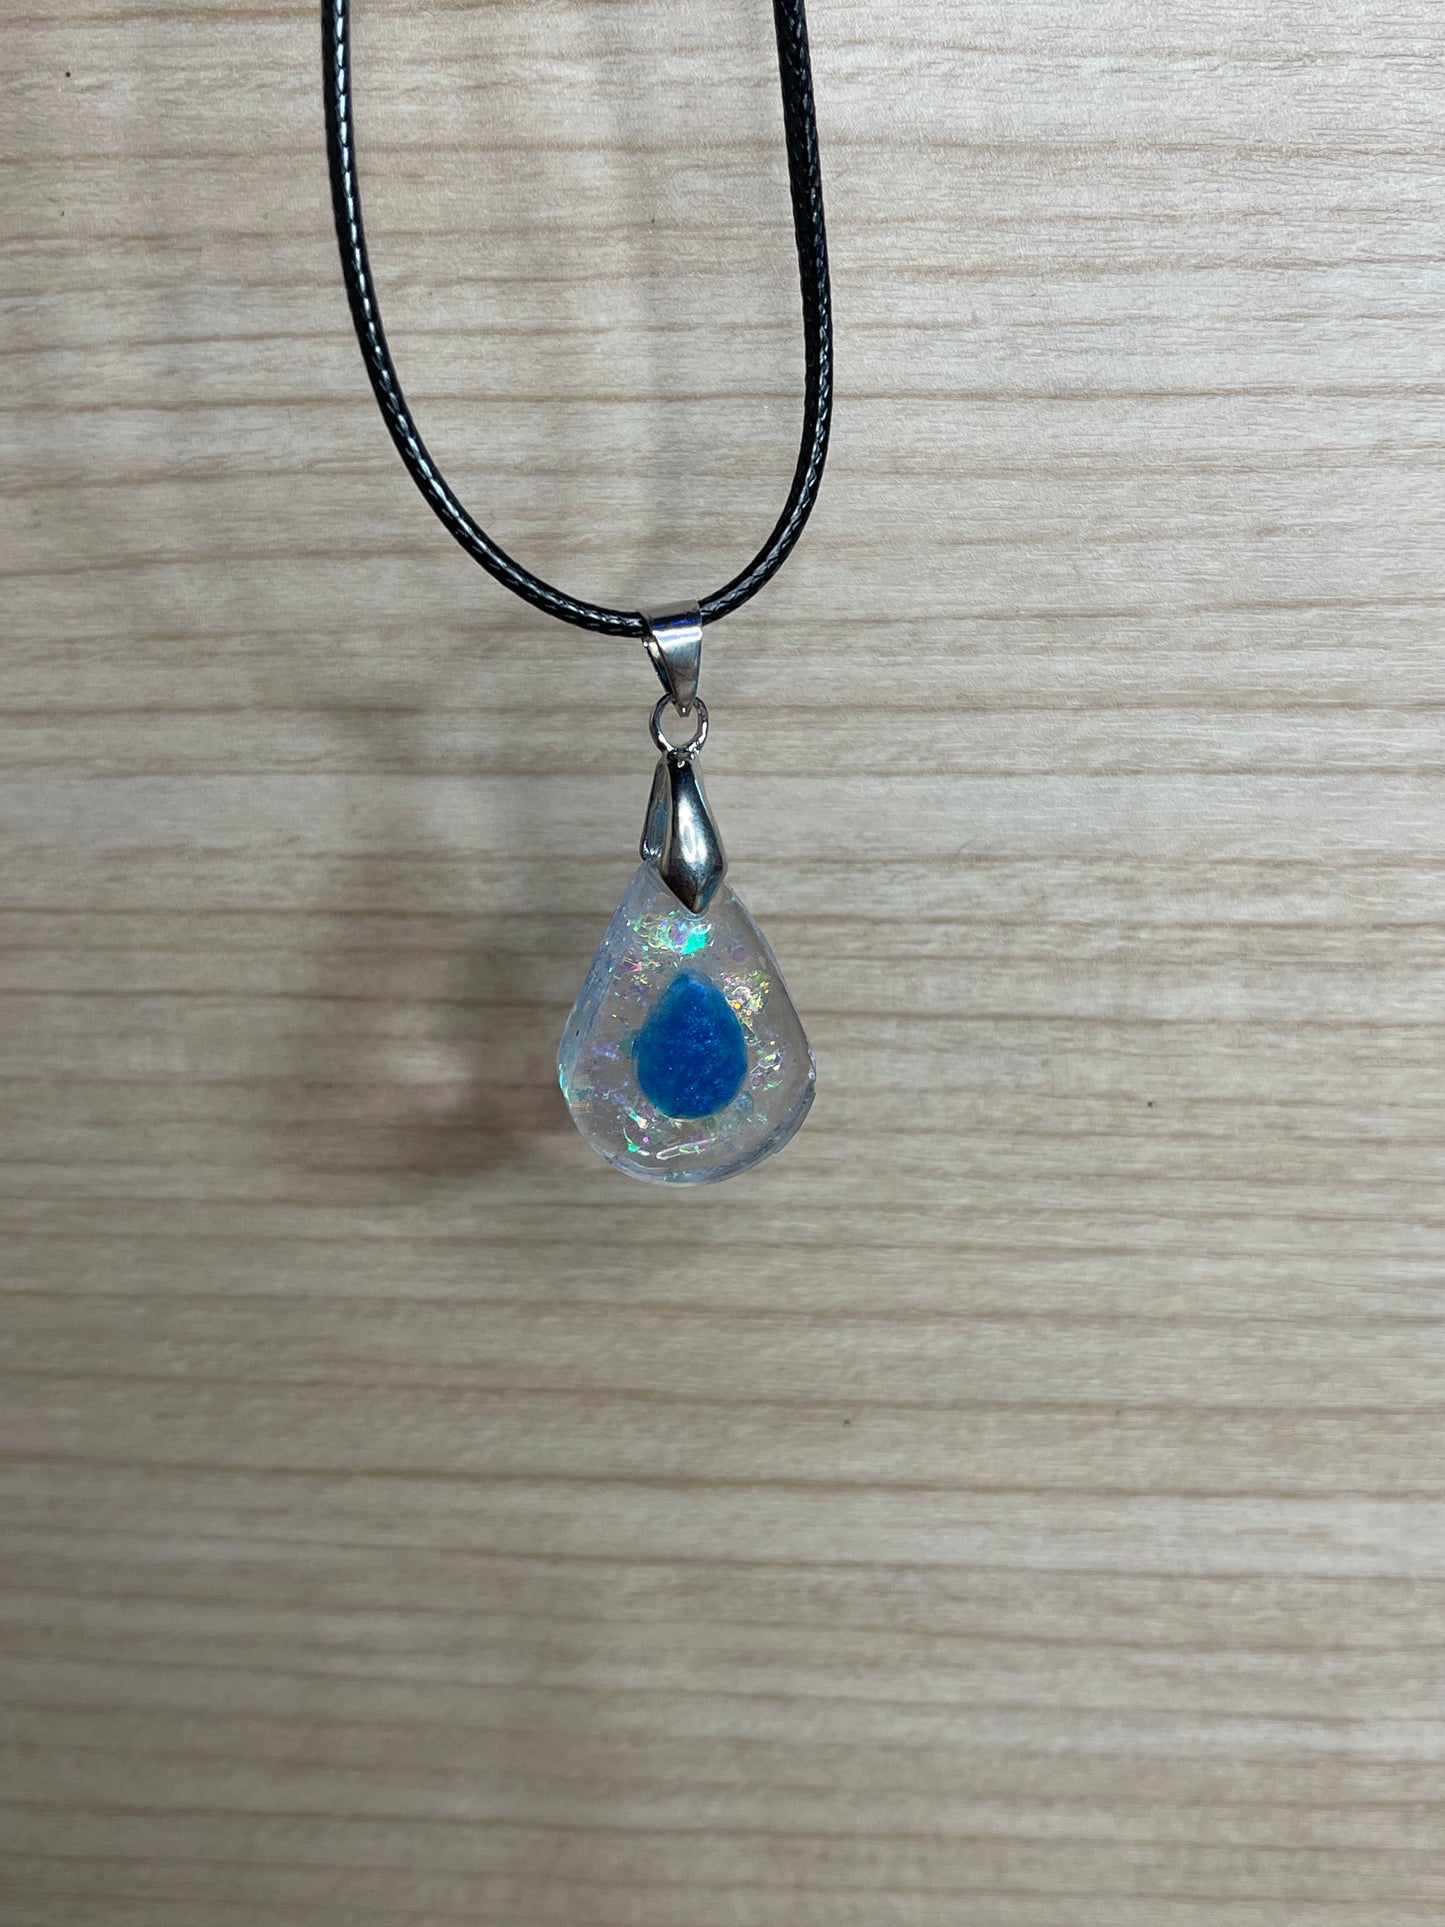 Blue Teardrop Set in Clear Holographic Teardrop Resin Pendant Necklace